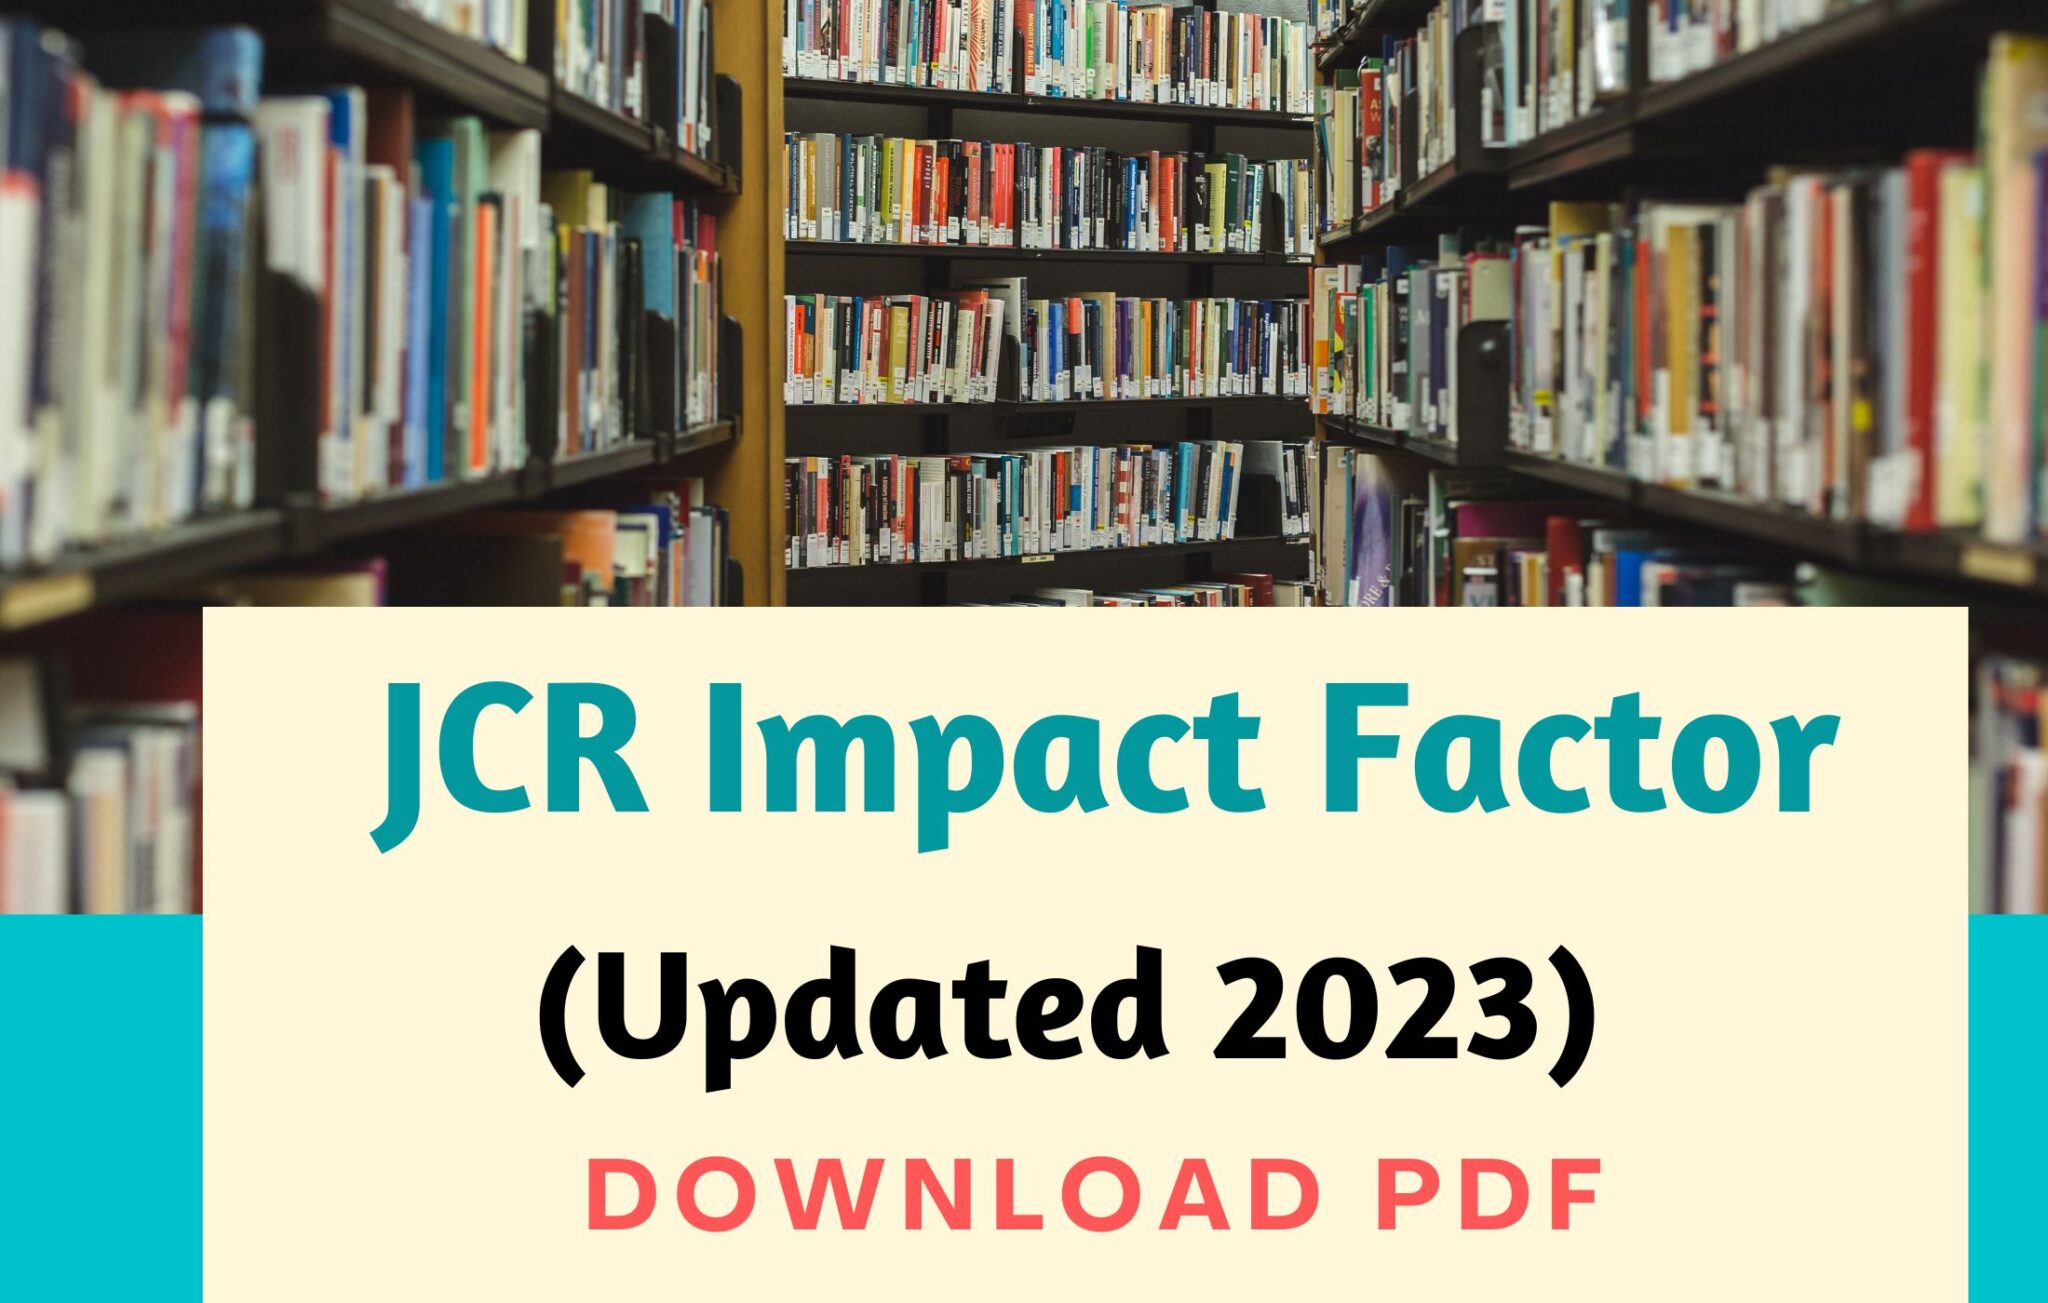 journal citation reports 2022 Journal Impact Factor